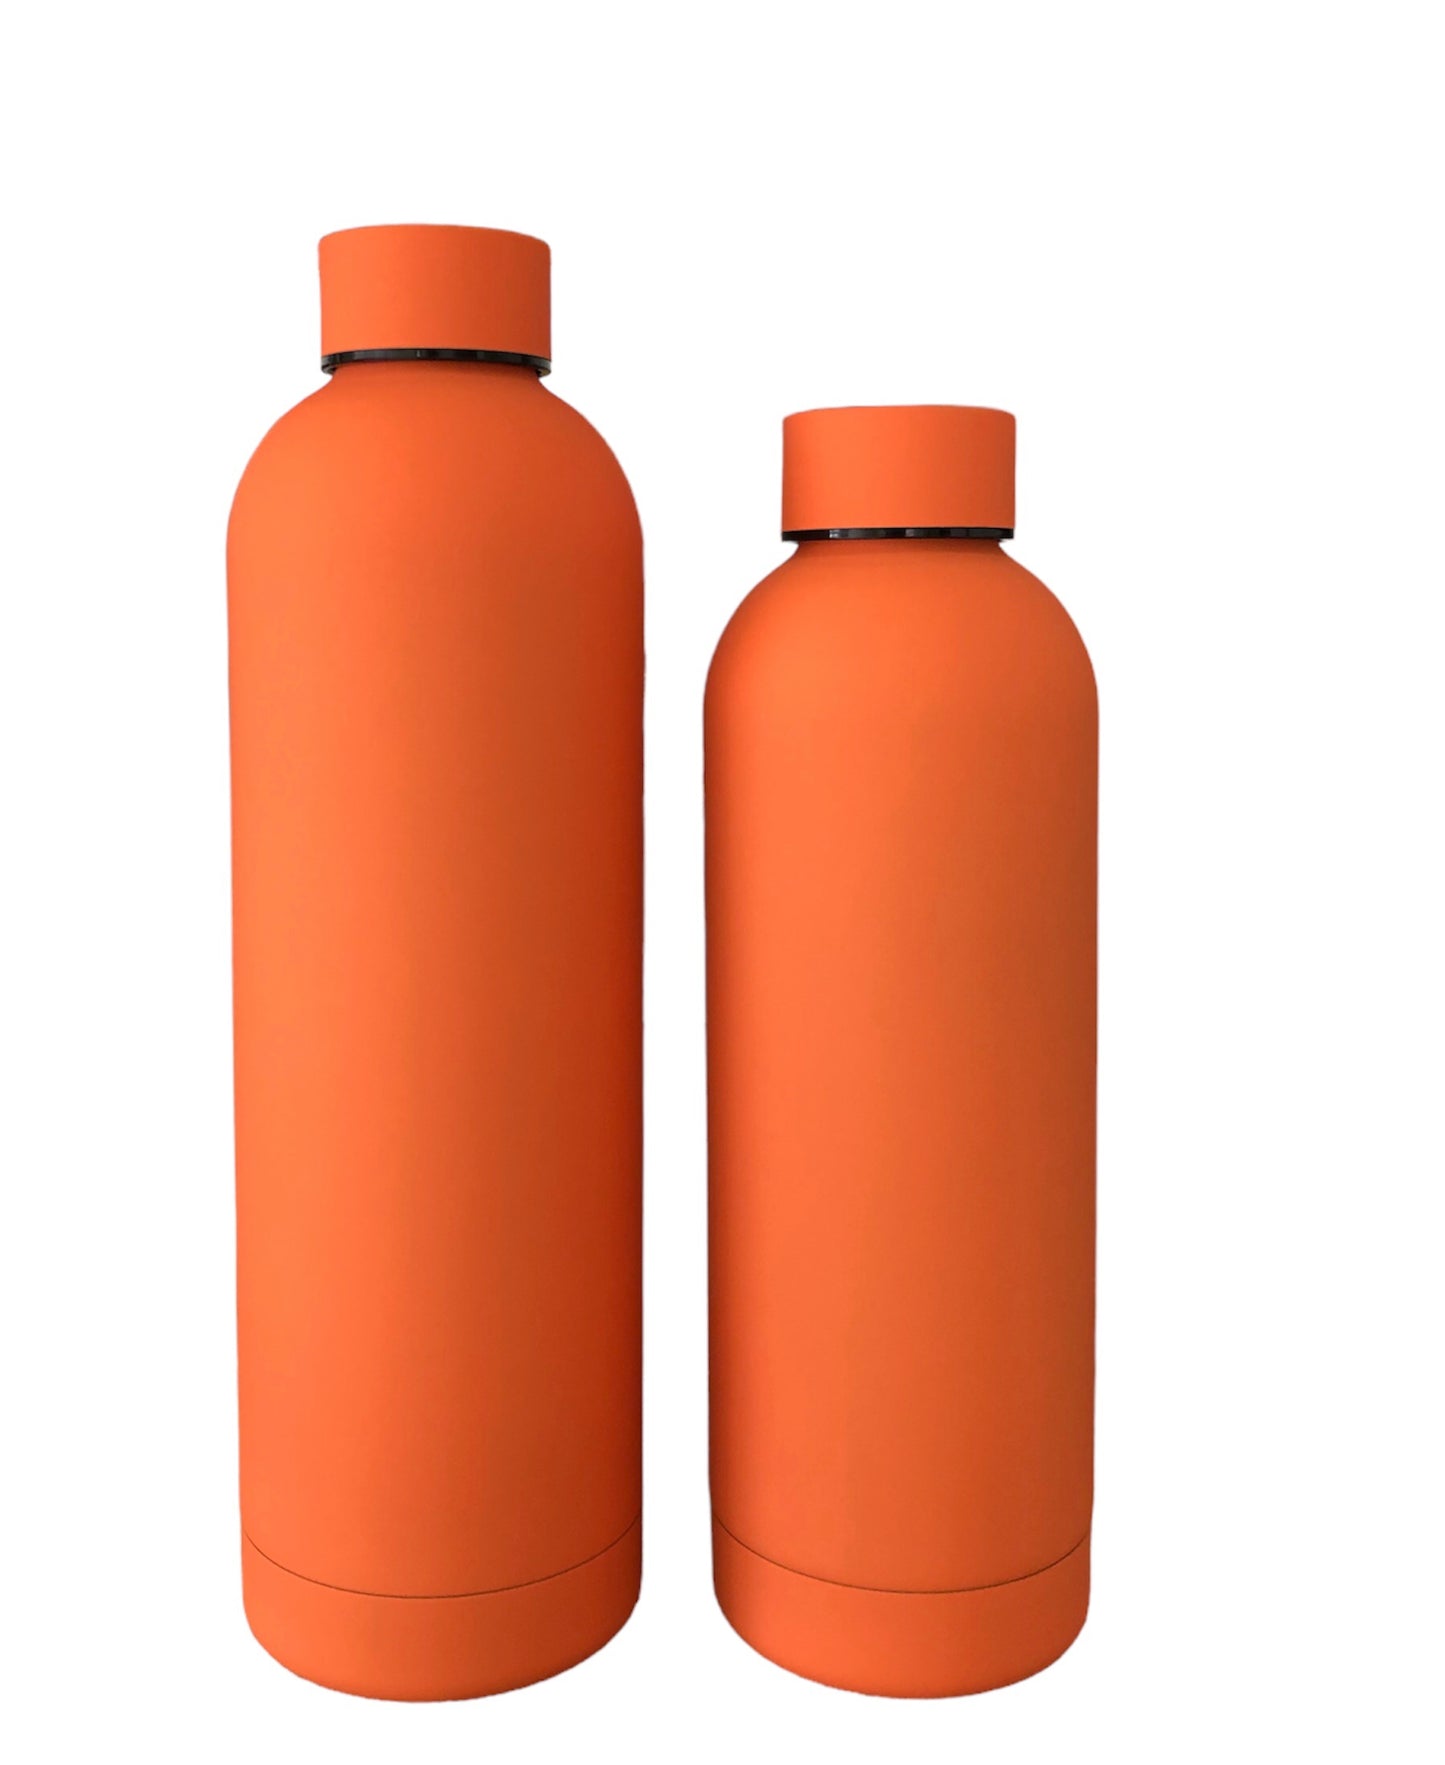 Matte water bottles